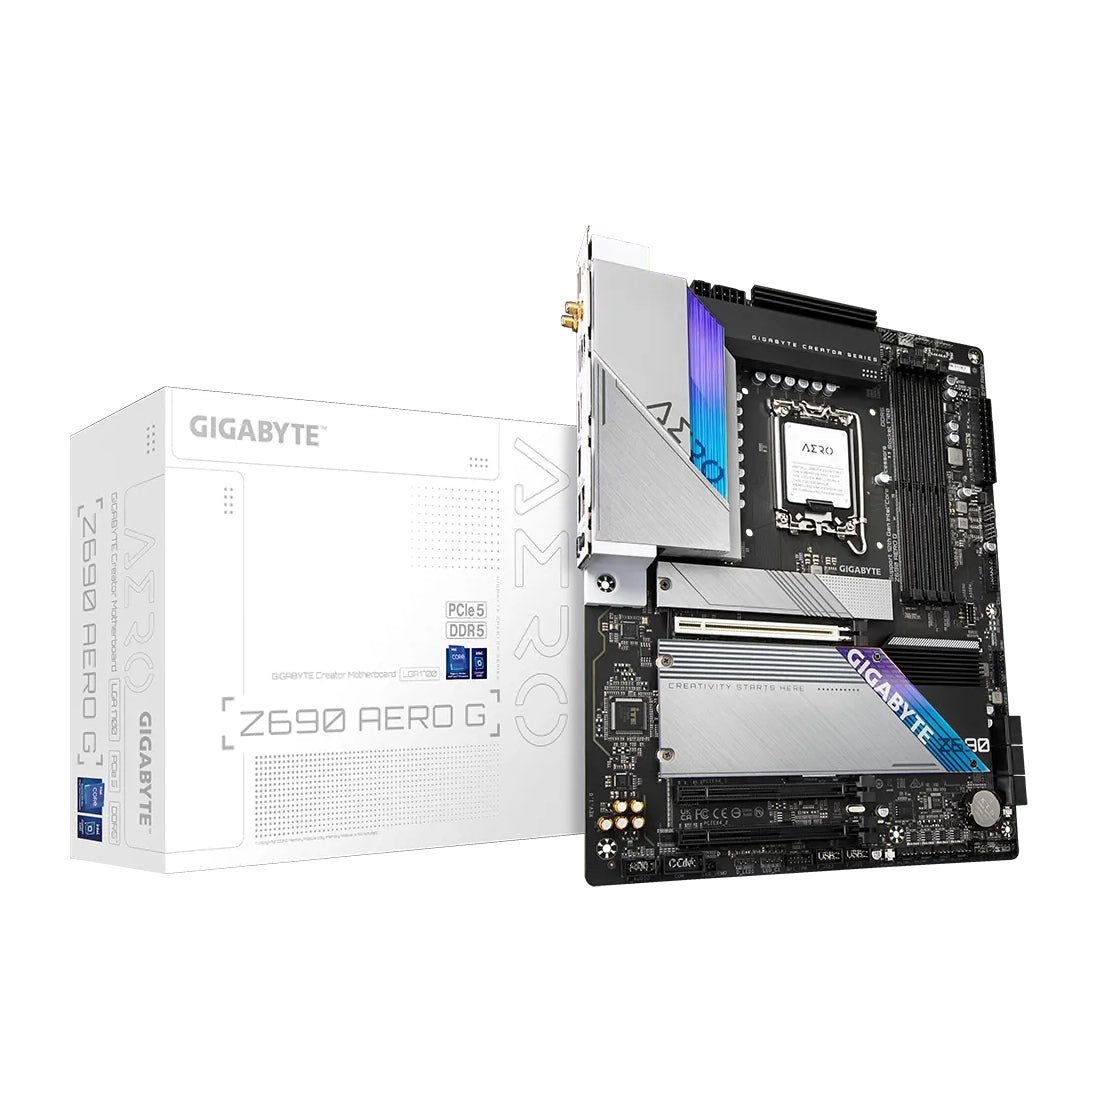 Gigabyte Z690 AERO G Wifi - DDR5 LGA 1700 Intel Motherboard - اللوحة الأم - Store 974 | ستور ٩٧٤